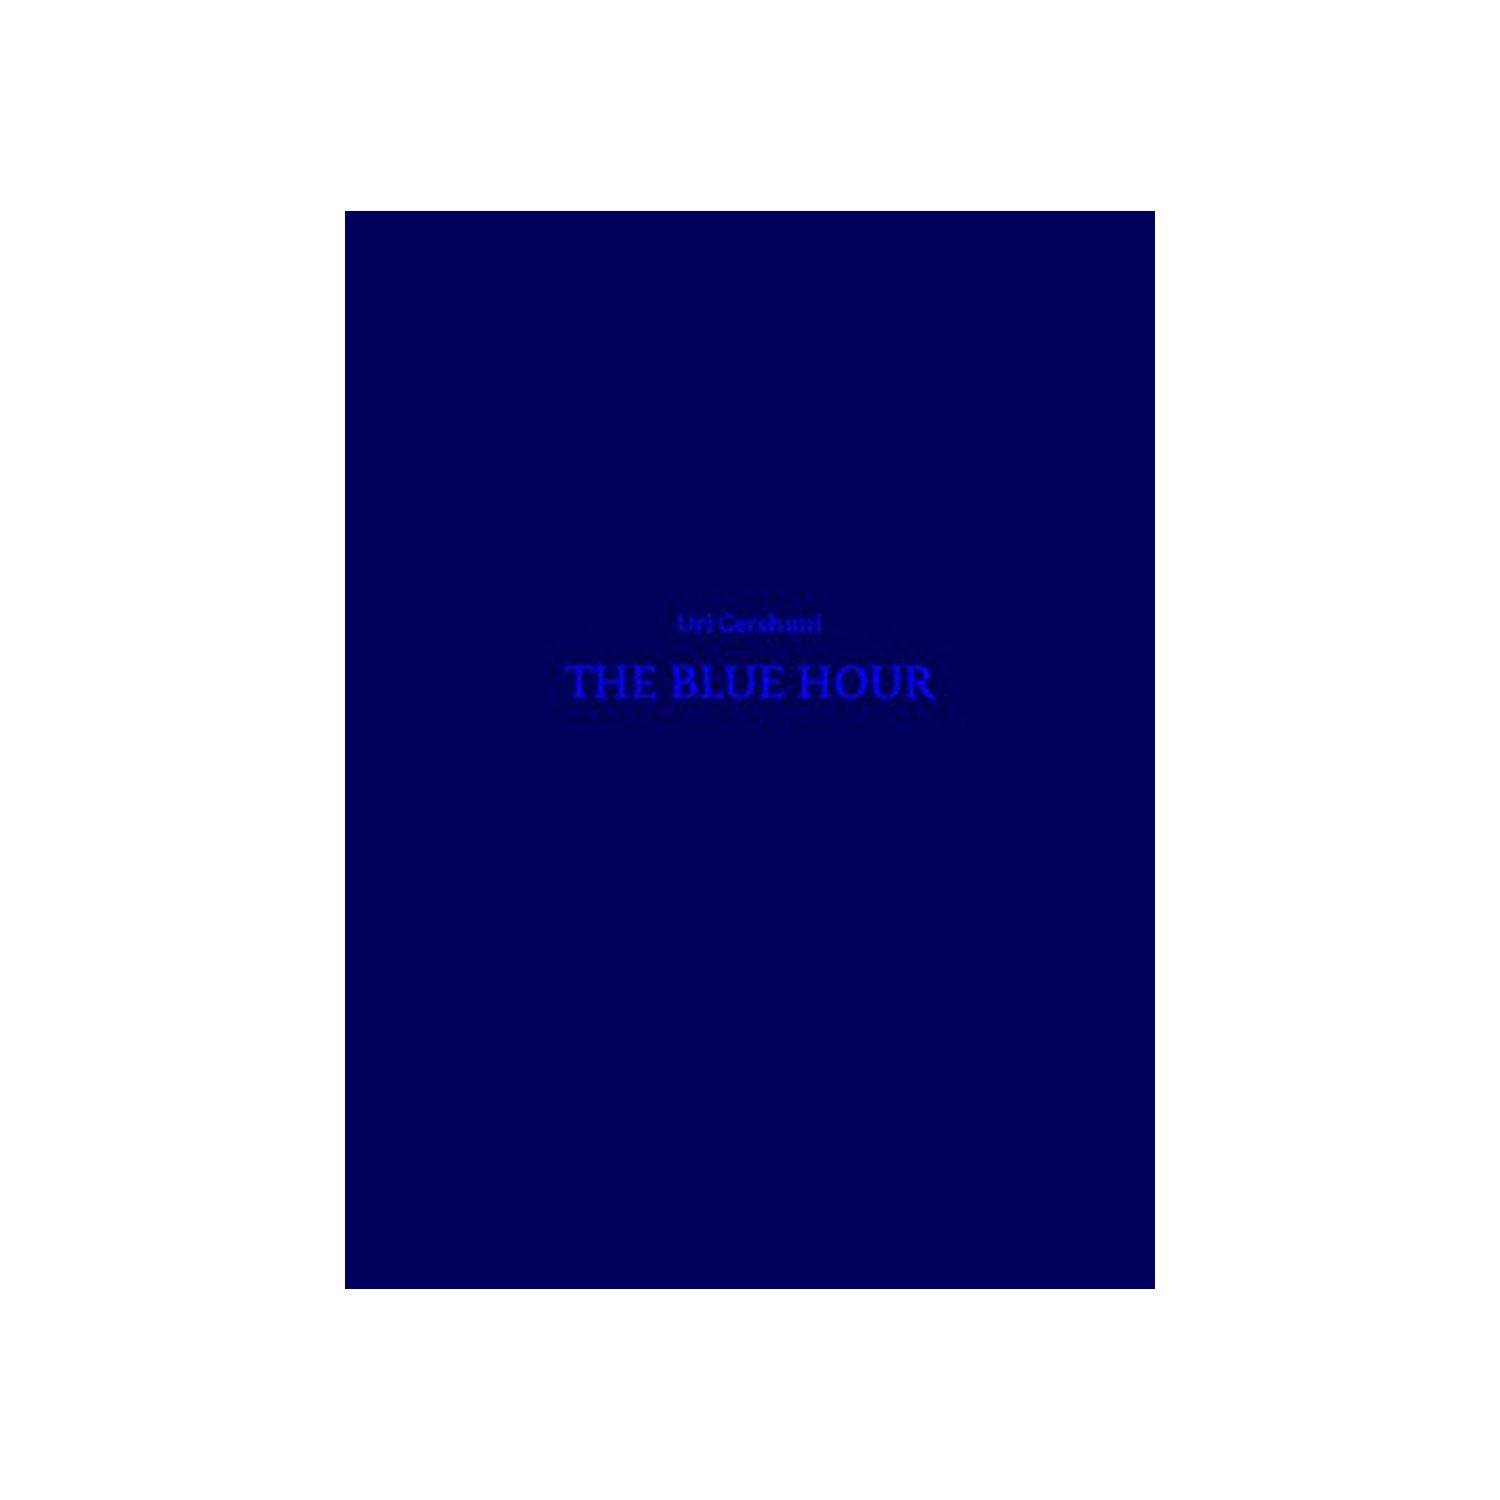 The Blue Hour by Uri Gershuni, Photo Museum Ireland